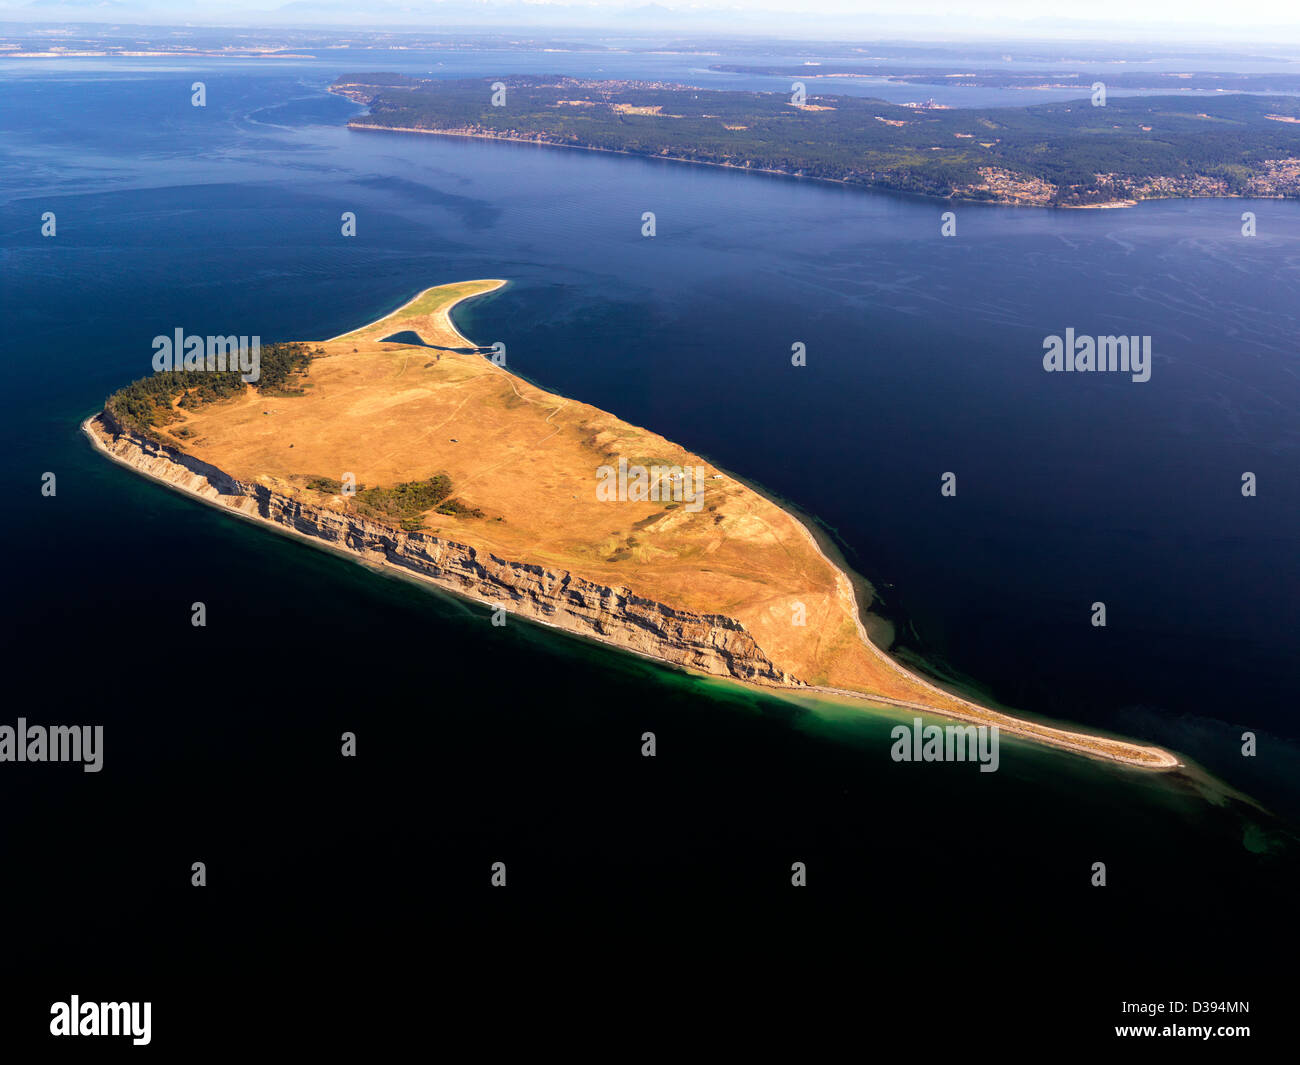 Protection Island in the Strait of Juan de Fuca in Washington, USA . An